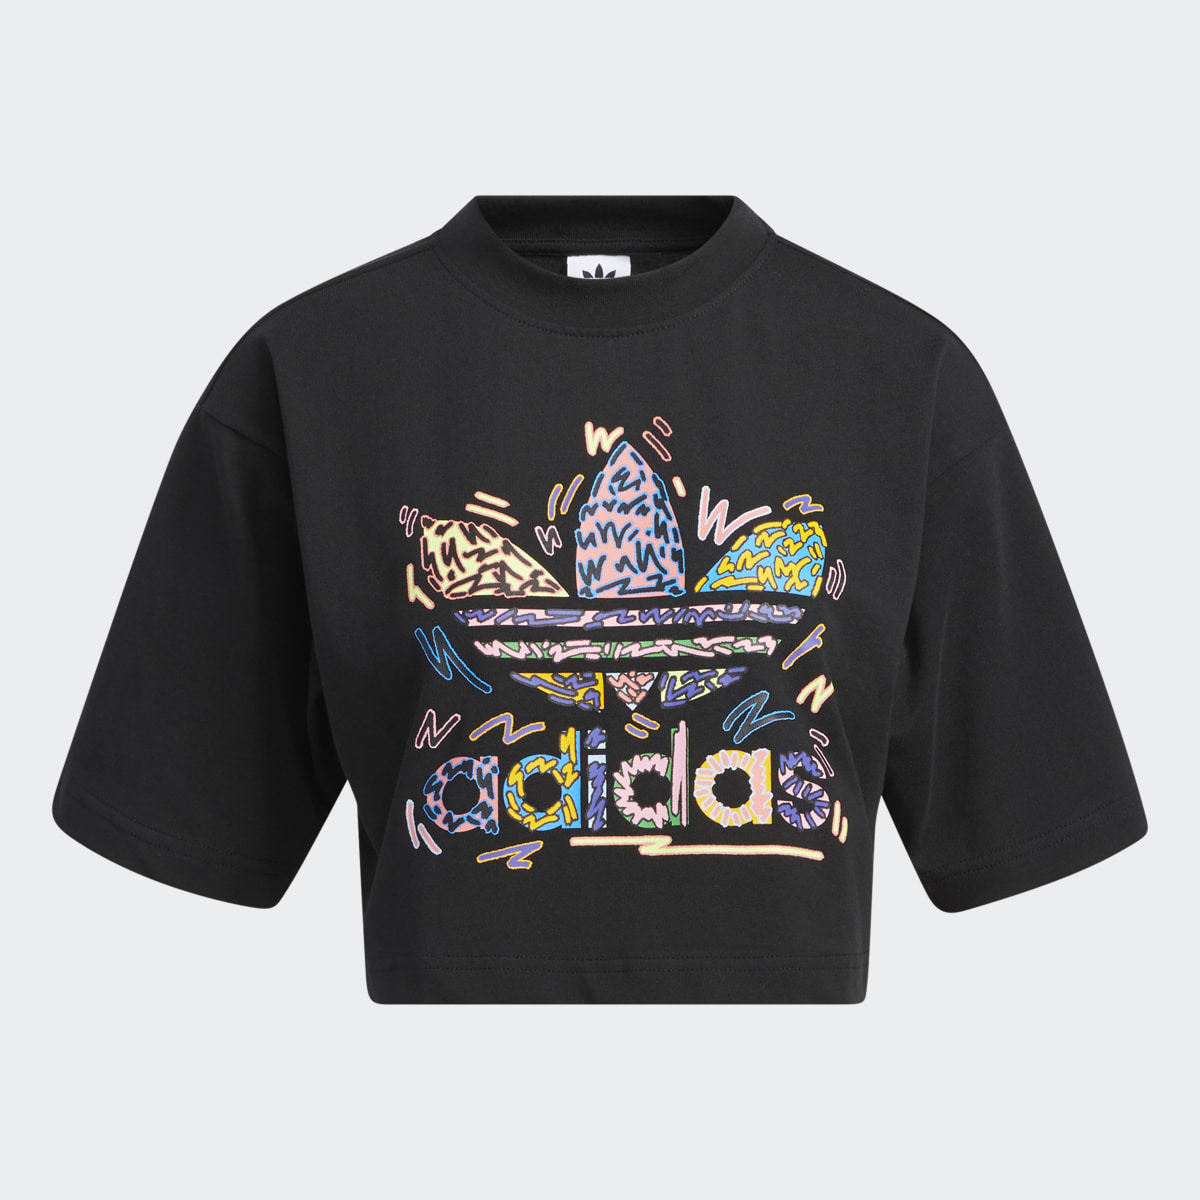 Adidas Love Unites Crop Trefoil T-Shirt. 6